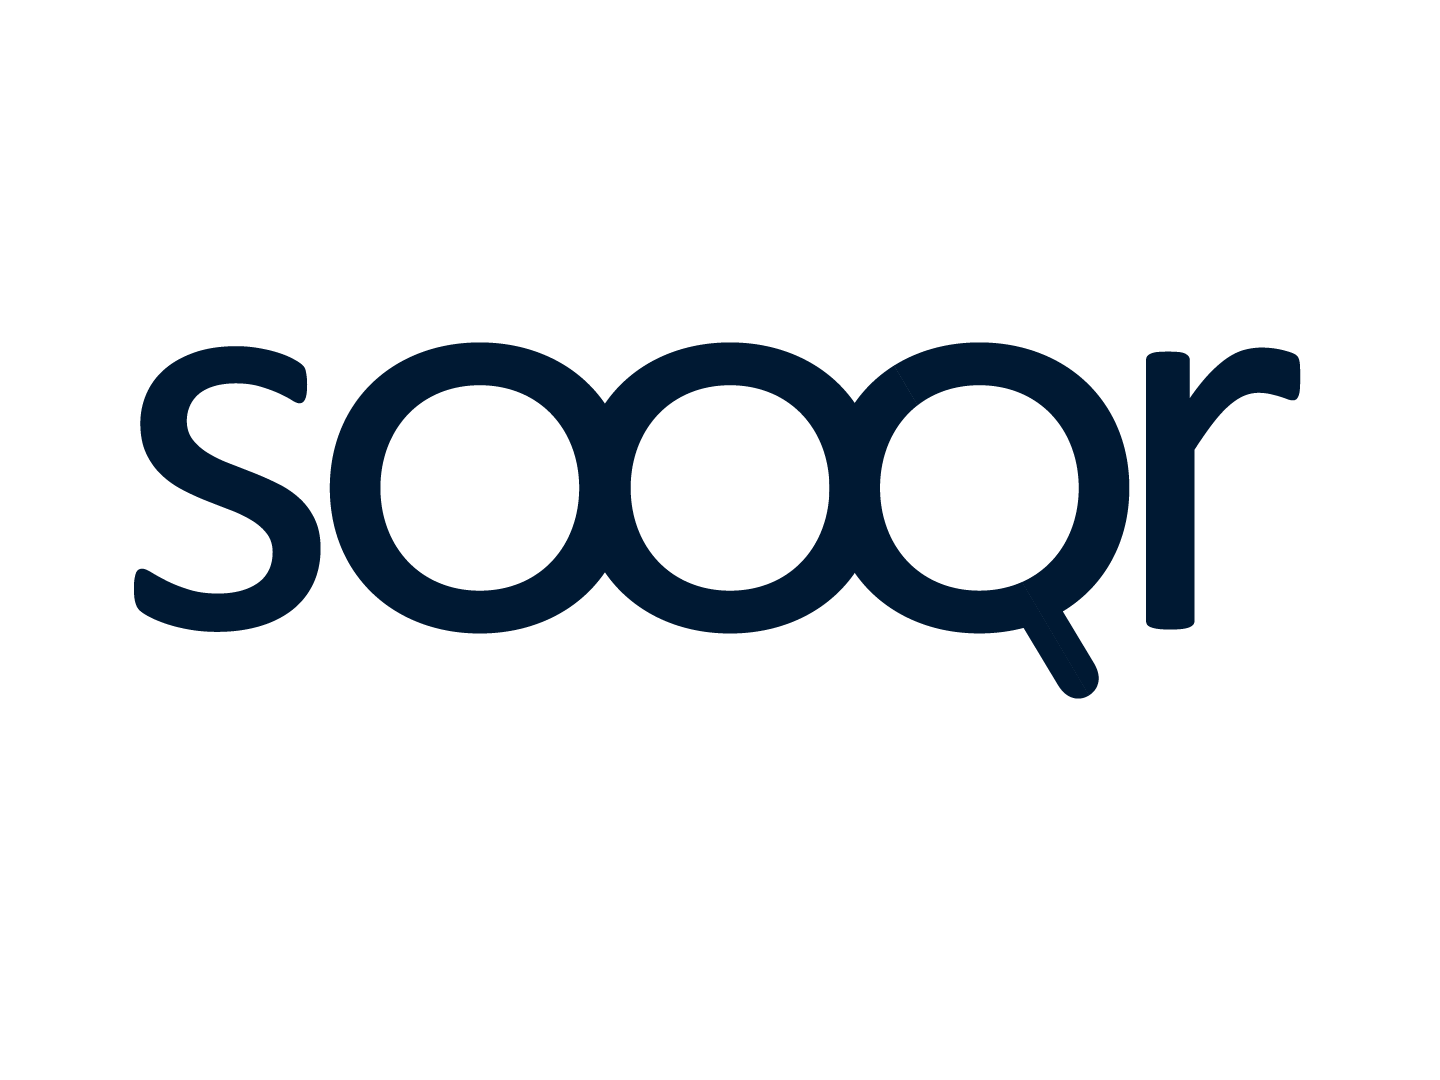 Sooqr DB logo